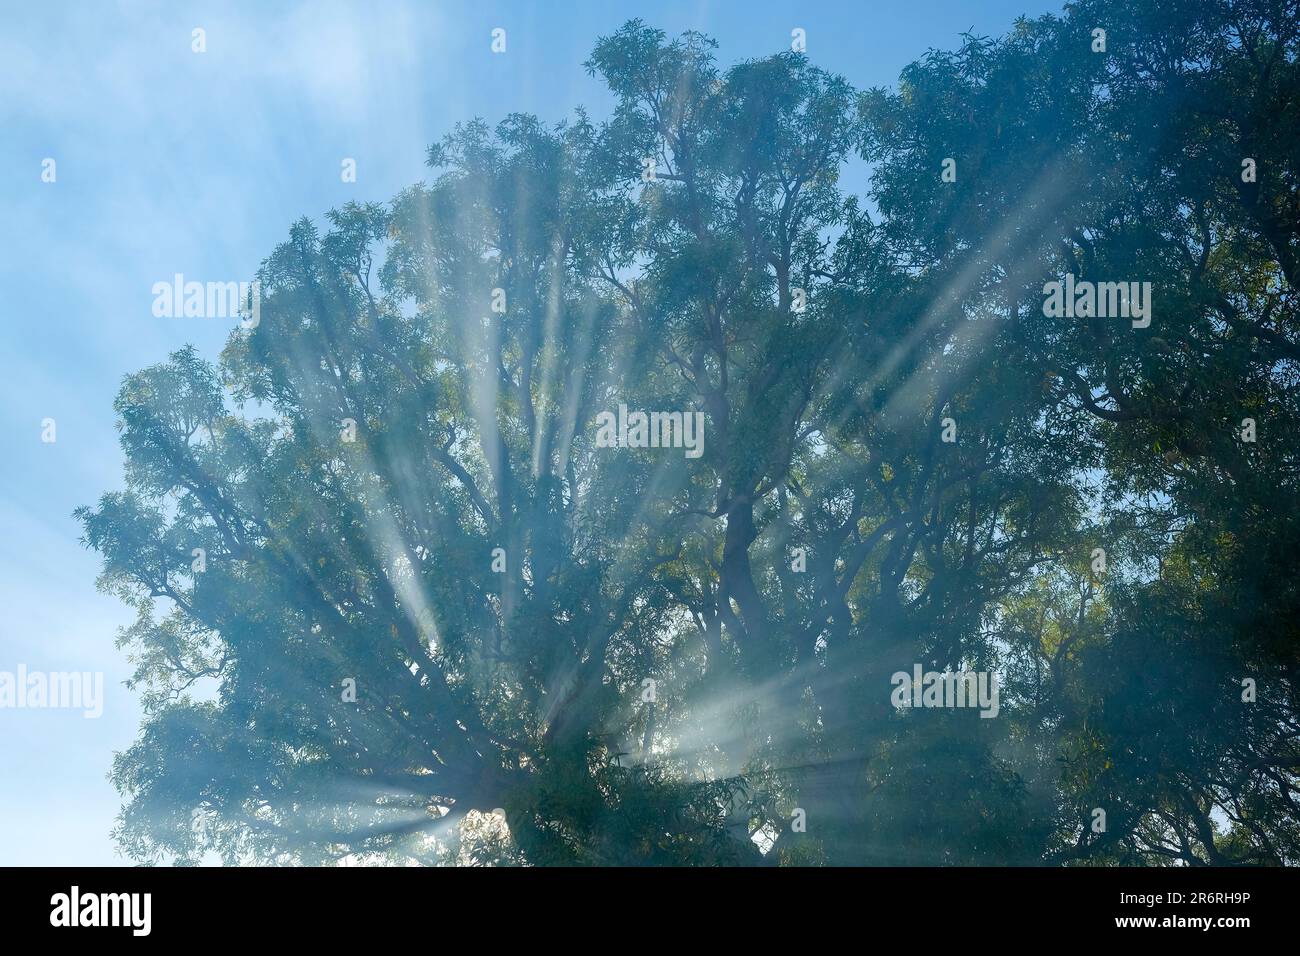 Sun rays sunbeam through tree branches Stock Photo